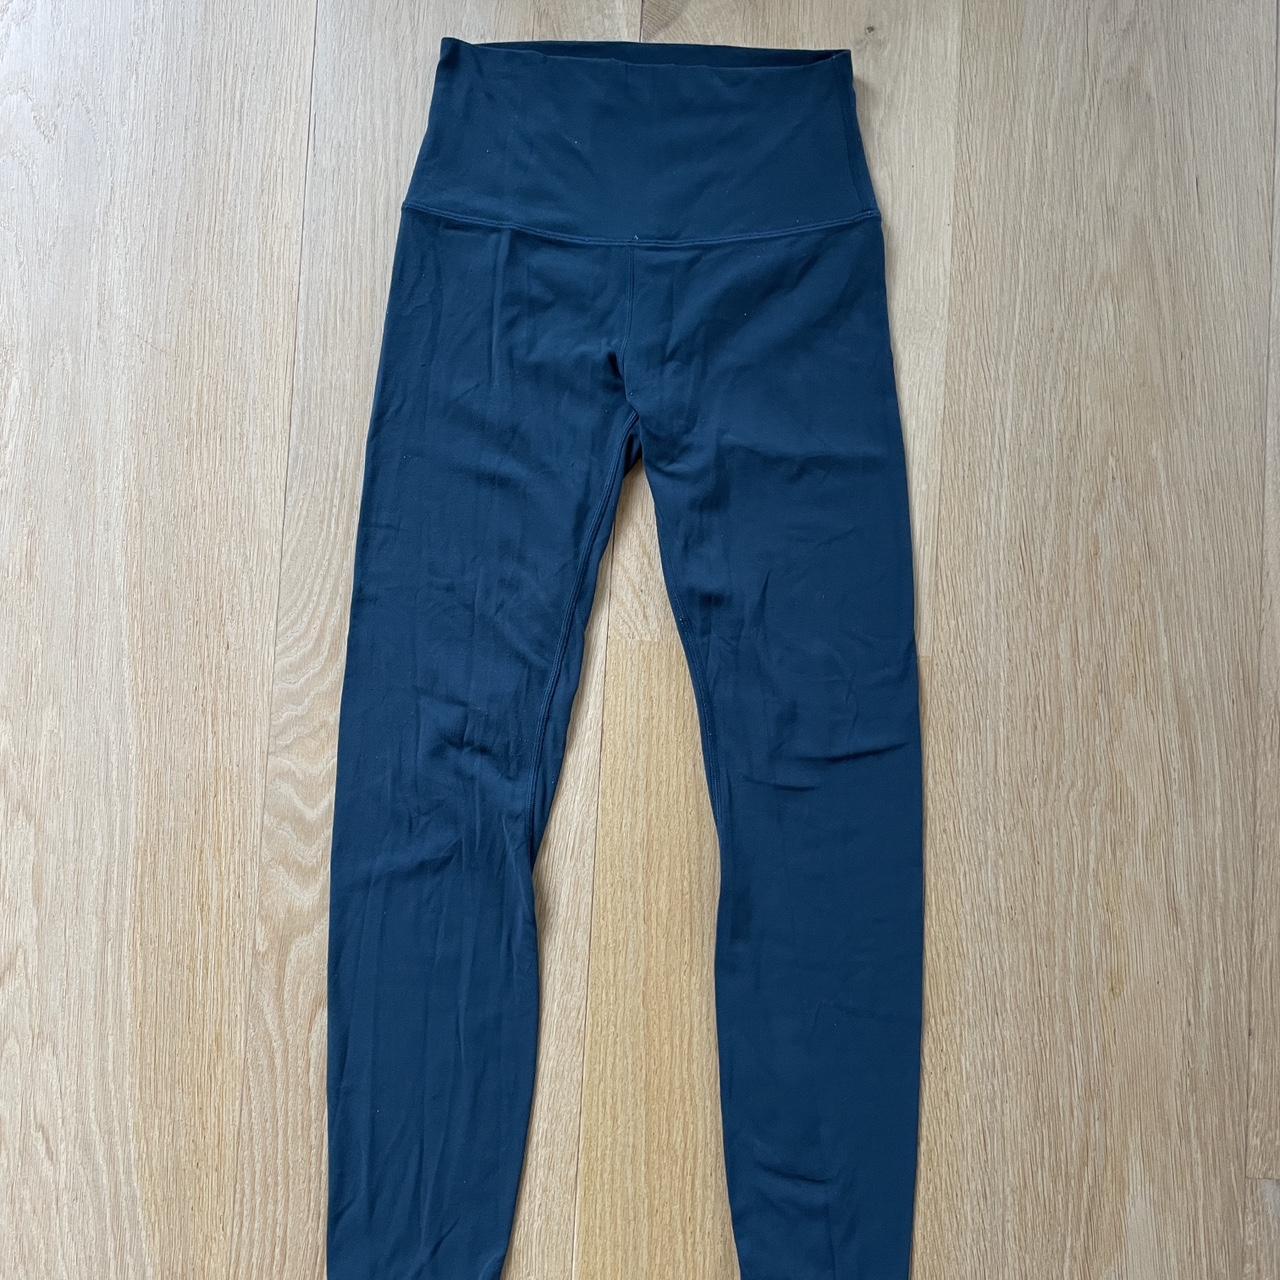 lululemon align pants dark teal blue fits - Depop